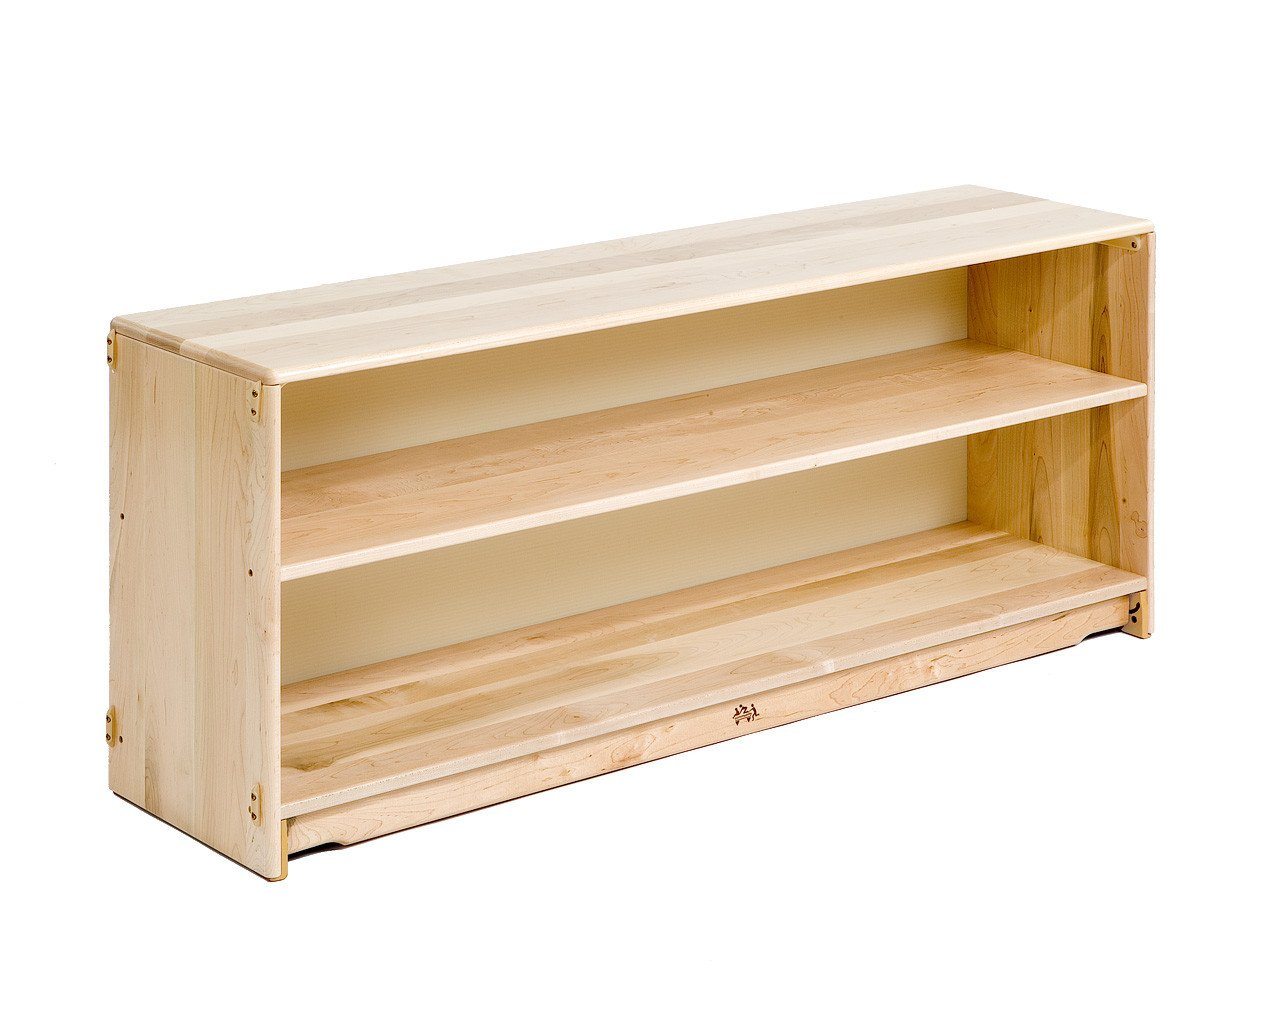 Fixed Shelf 5' x 24" by Community Playthings - louisekool